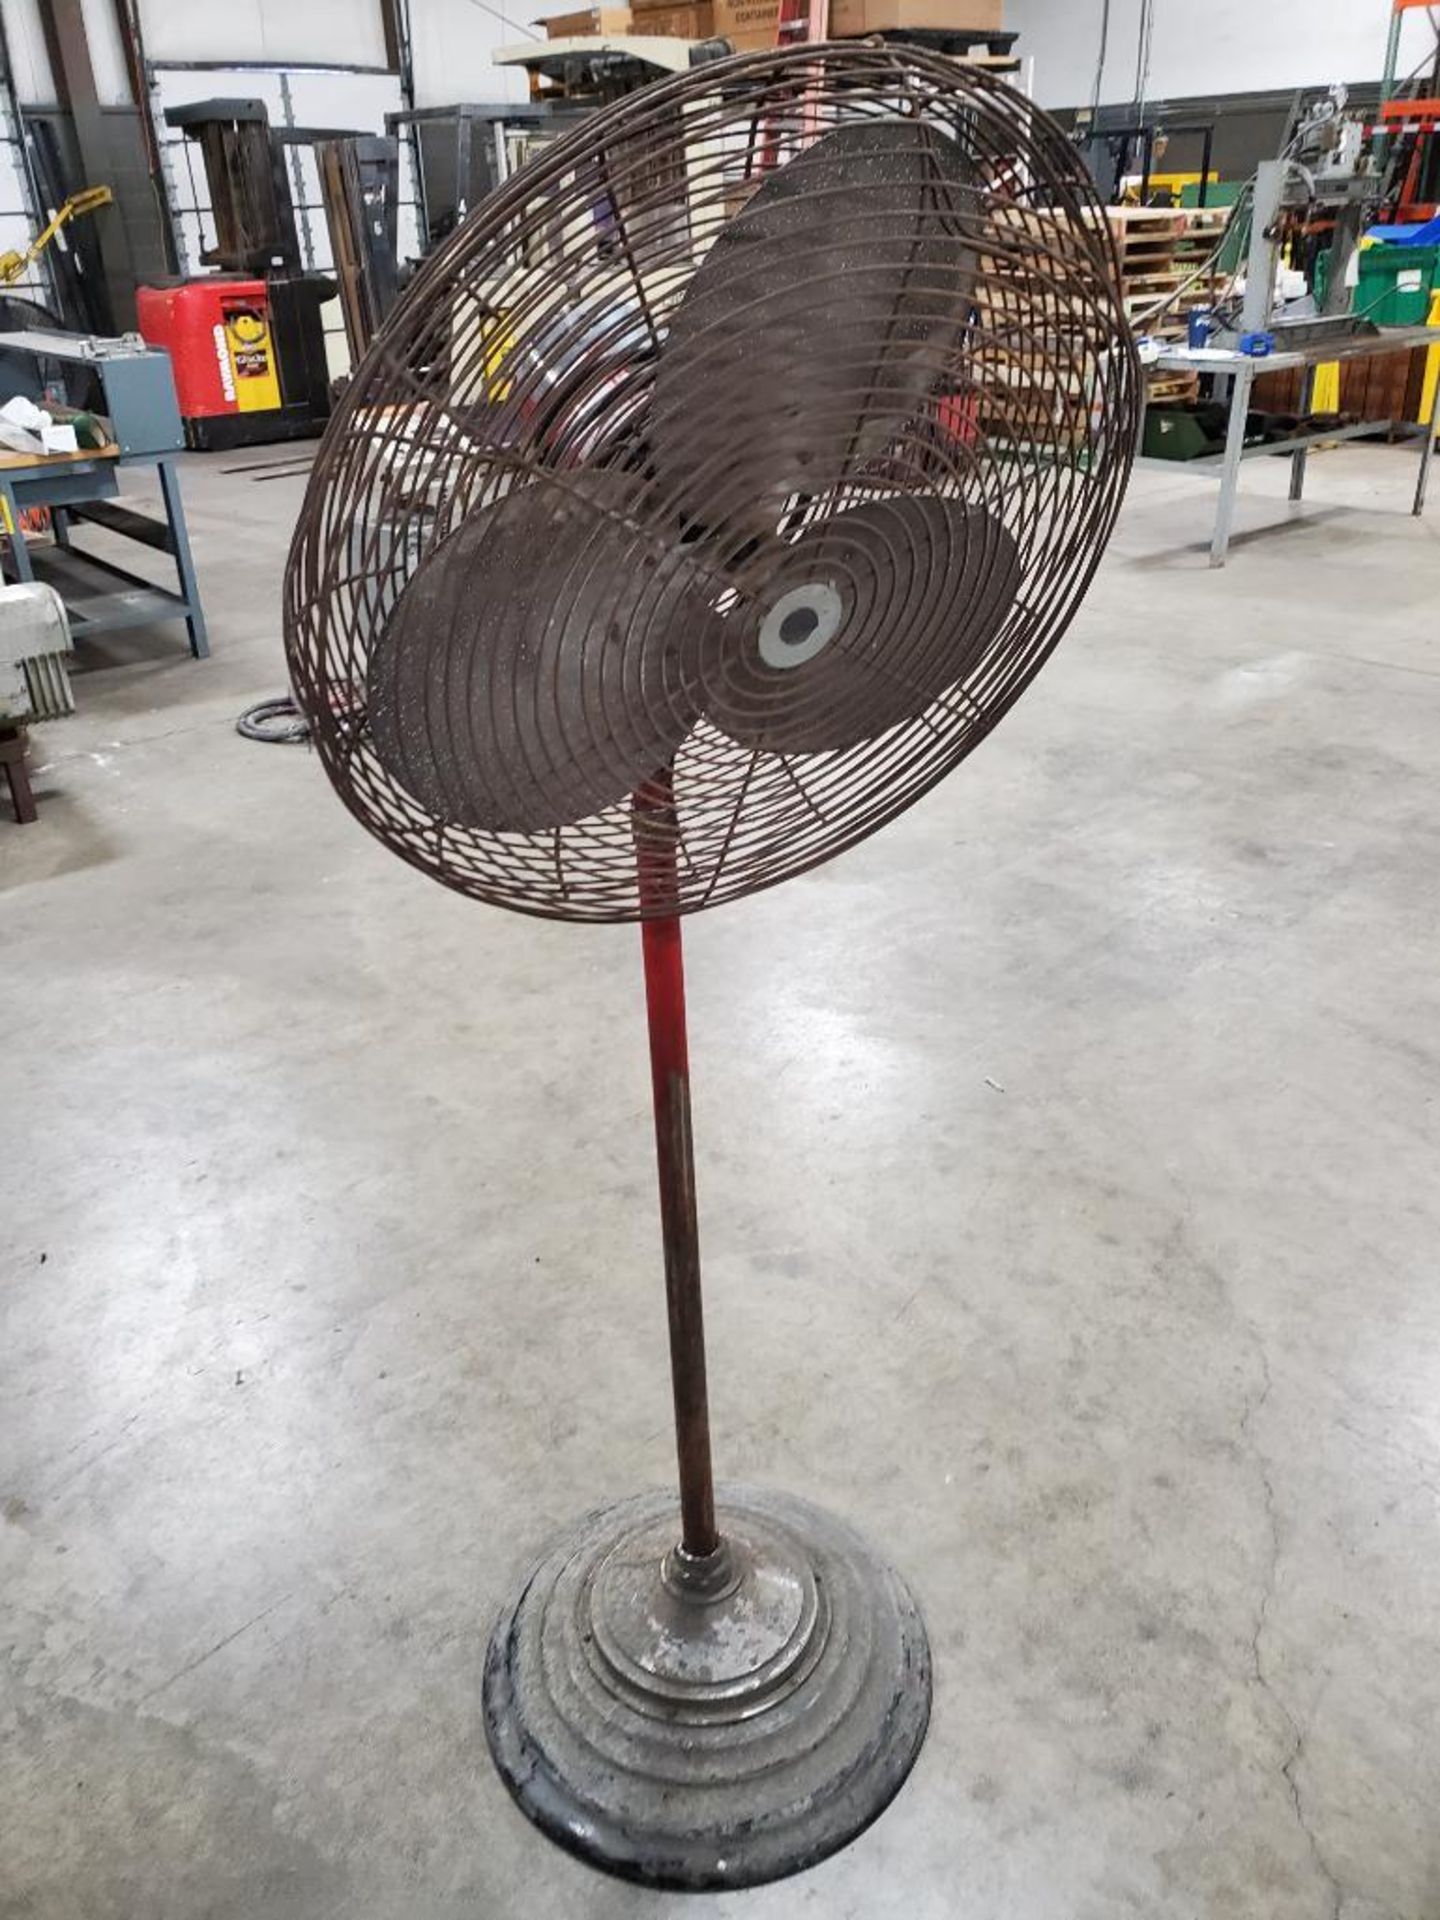 Dayton pedestal shop fan. 1/4HP motor. 1PH, 115V.